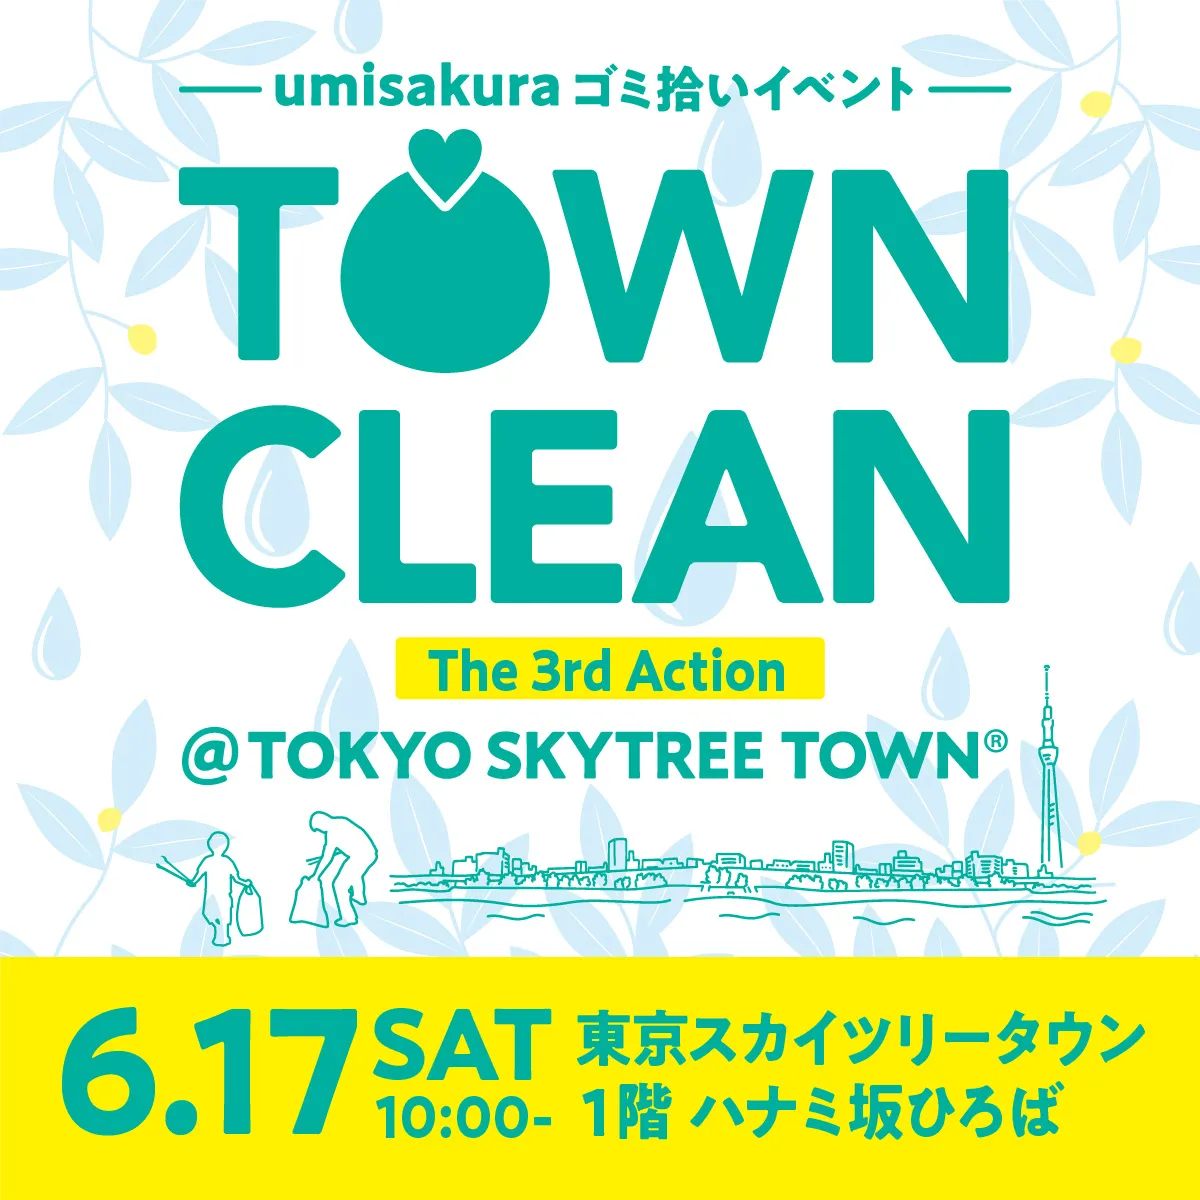 TOWN CLEAN＠TOKYO SKYTREE TOWN®